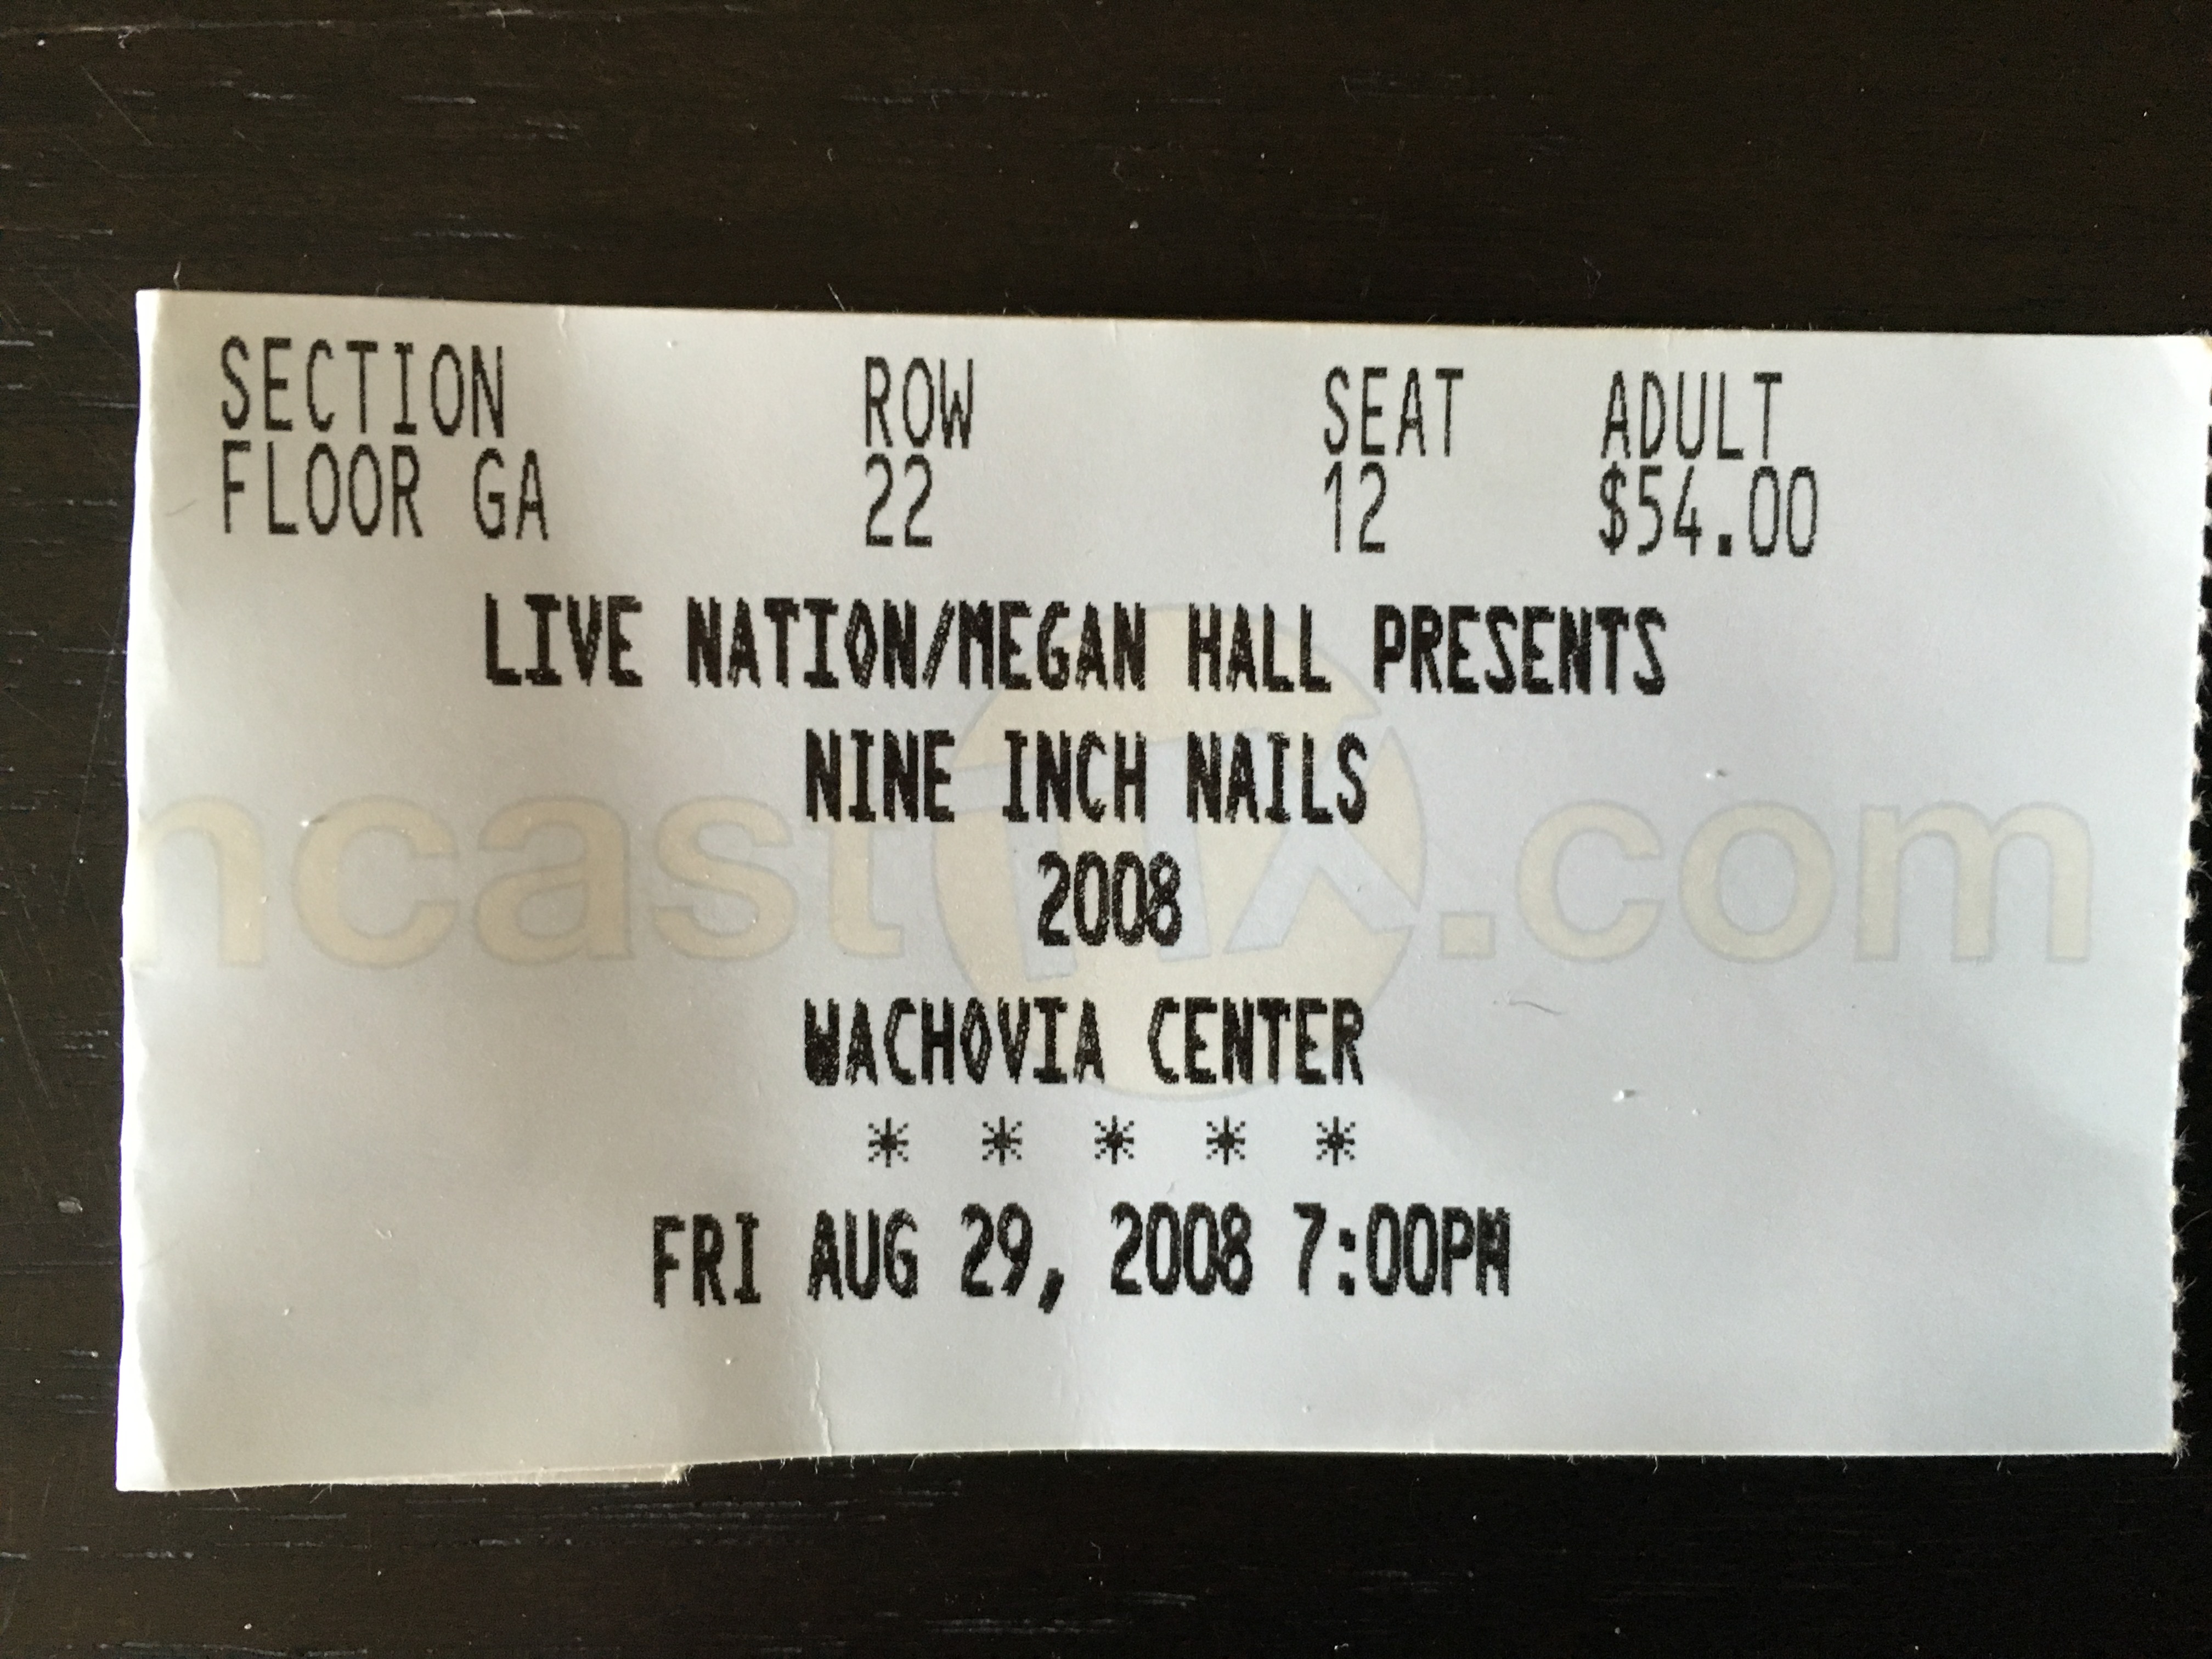 2008/08/29 Ticket